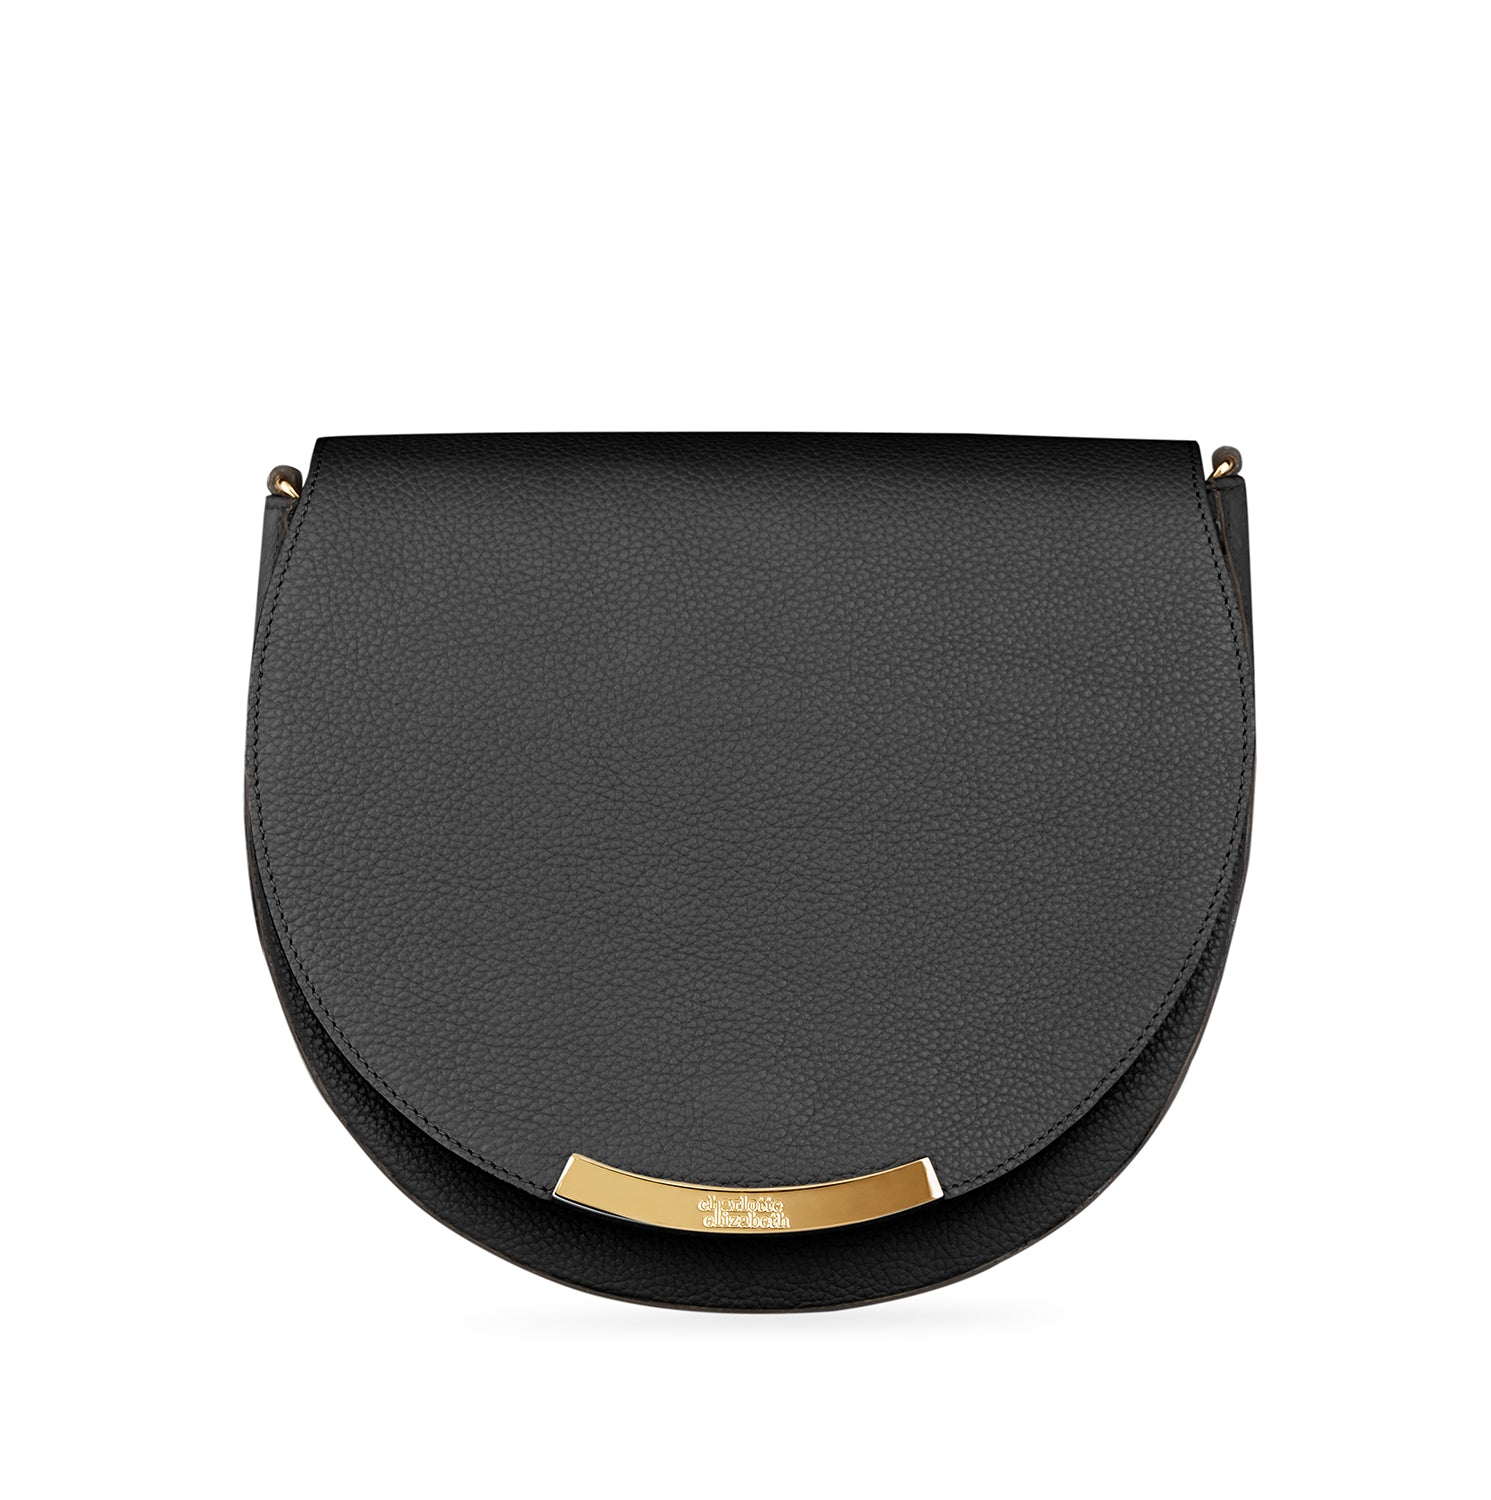 Ladies leather crossbody saddle handbag made in London in black